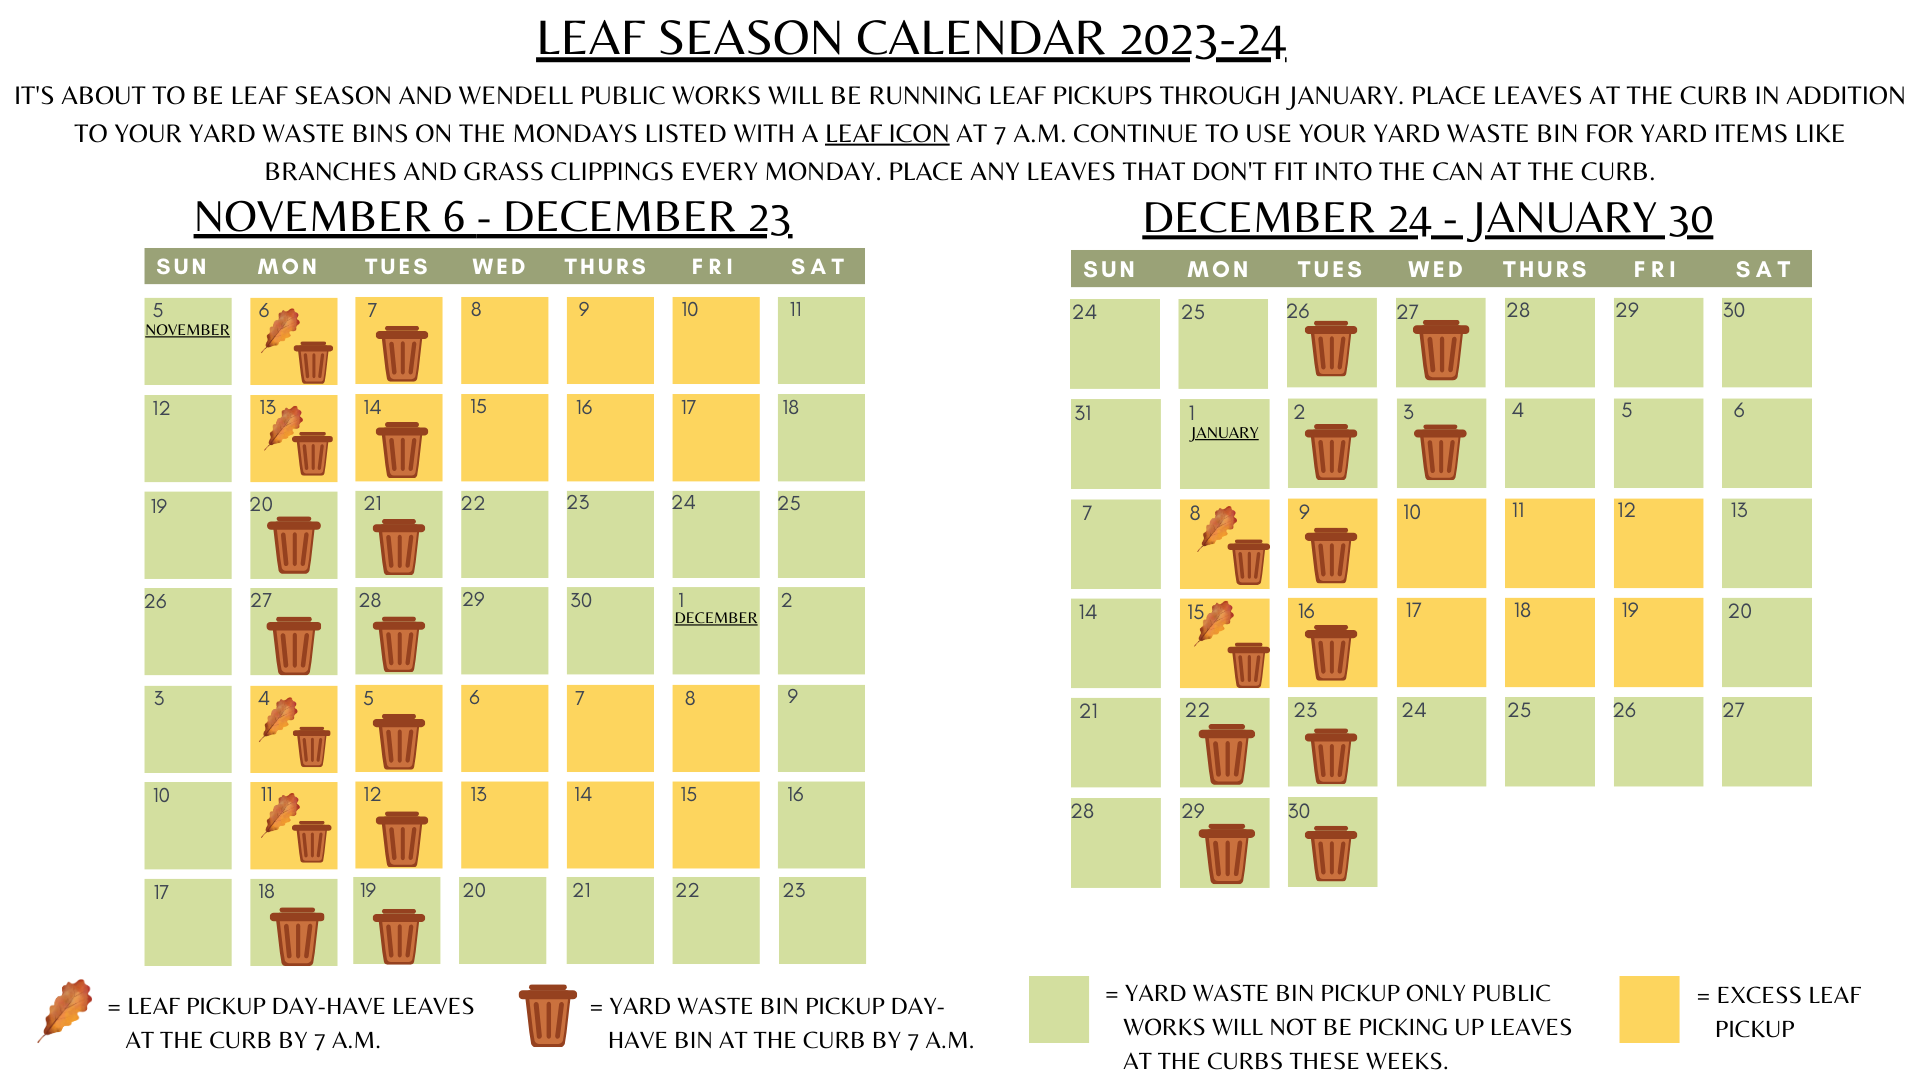 https://nmcdn.io/e186d21f8c7946a19faed23c3da2f0da/3834b95a93b14b3689a528c1f97c5d69/files/Leaf-Season-Calendar-2023-2024-.png